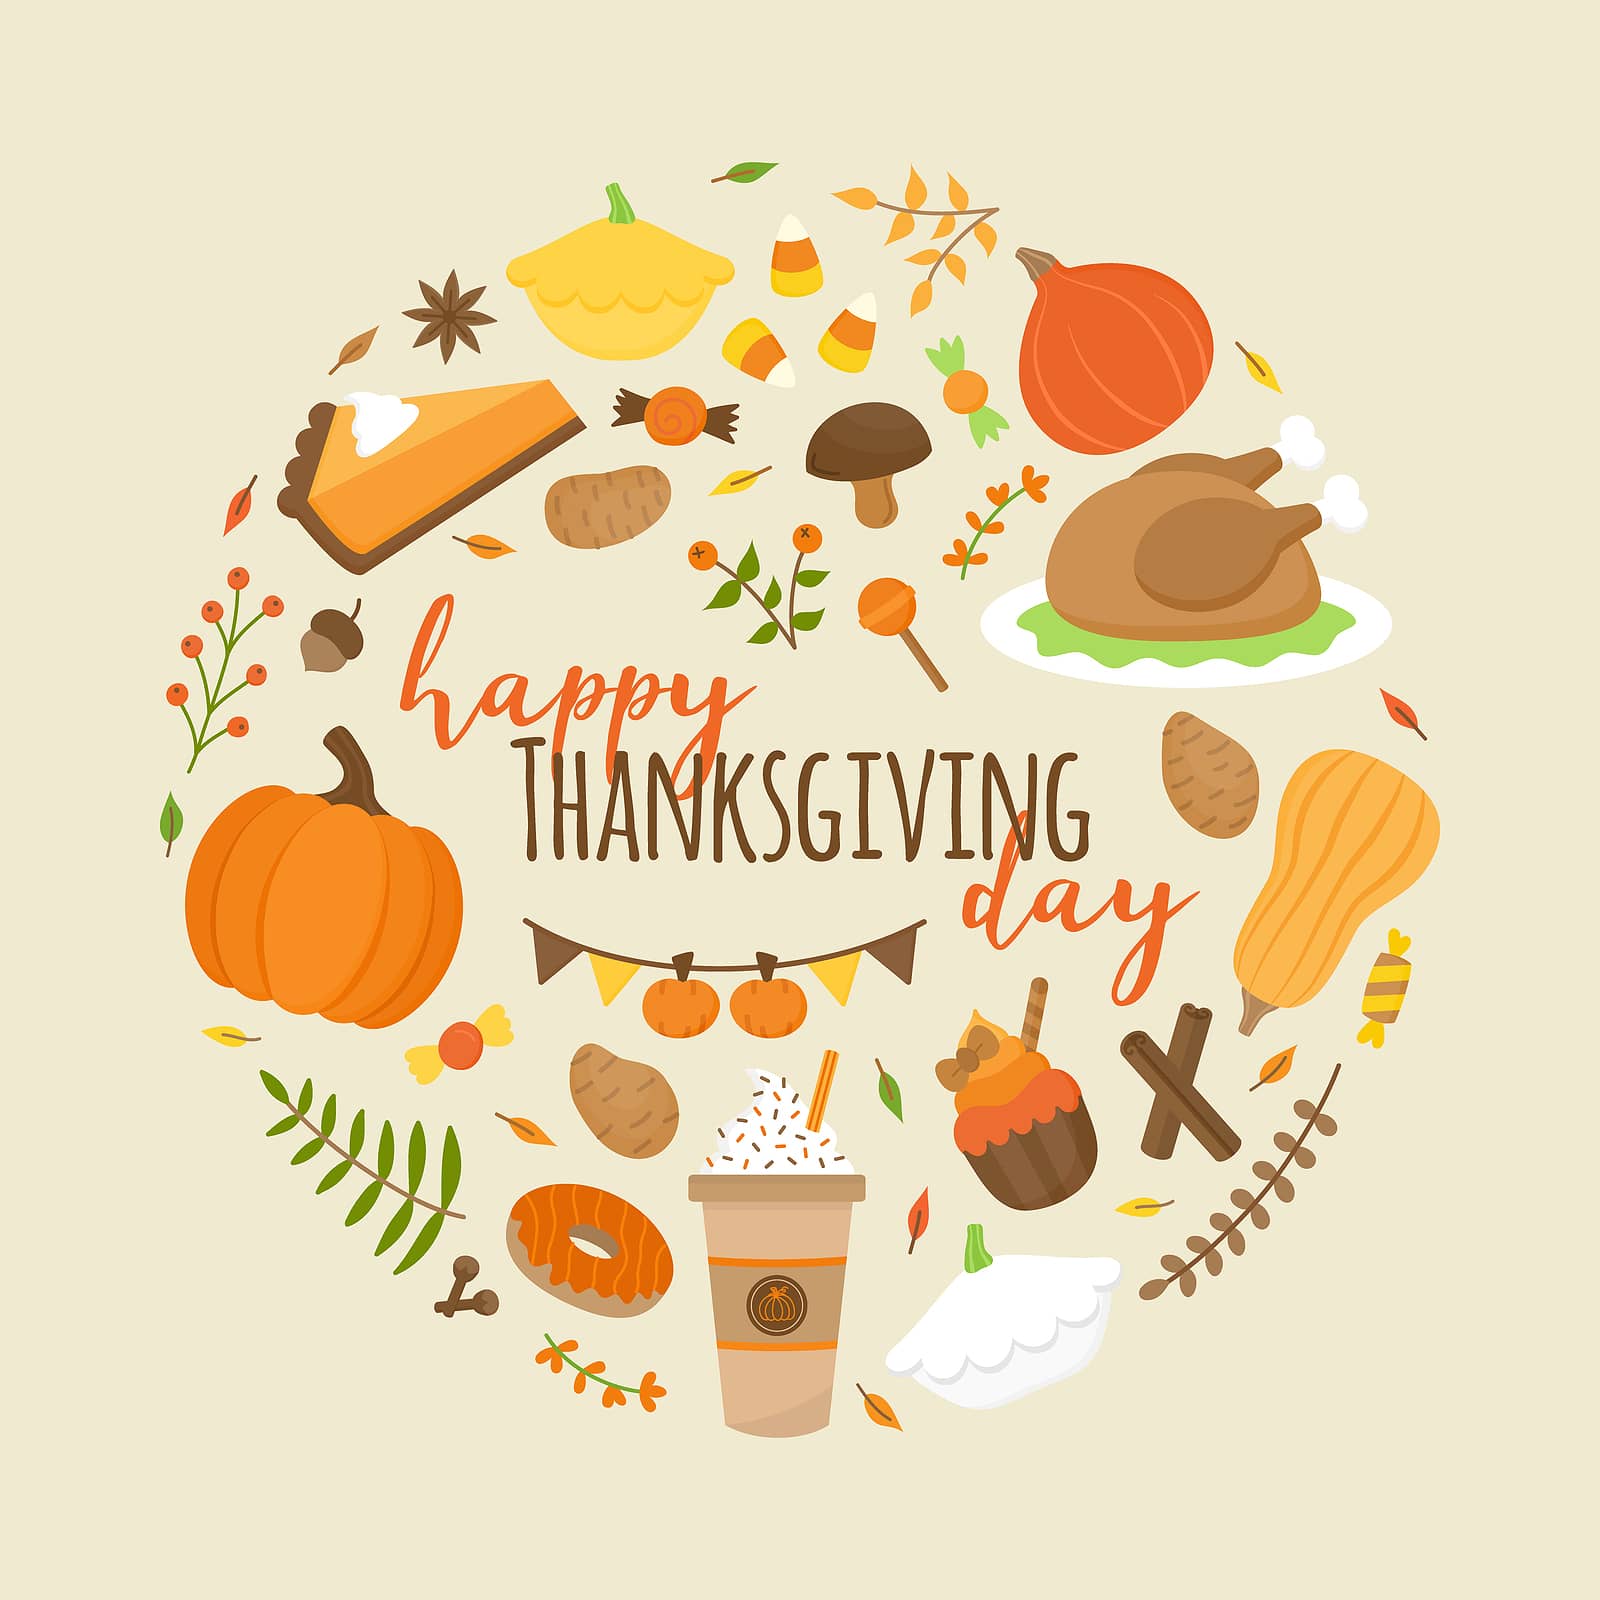 happy-thanksgiving-day-vector-round-illustration-graphic-autumn